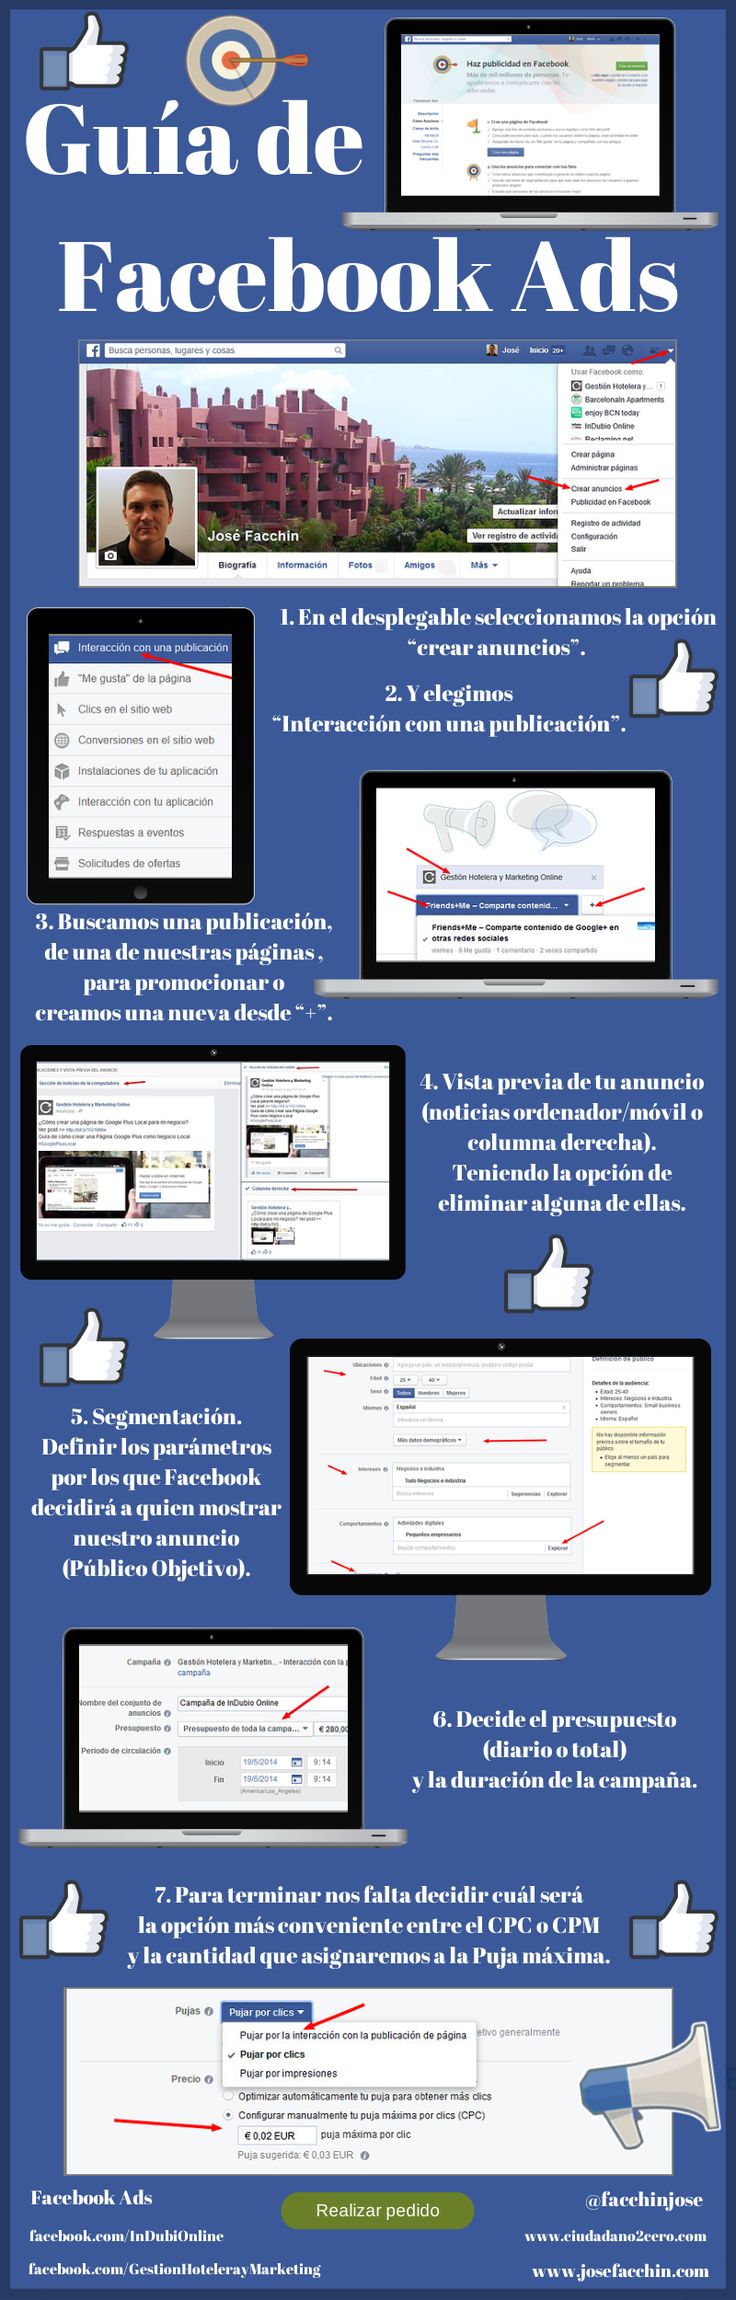 Advertising-Infographics-Que-es-Facebook-Ads-para-que-sirve Advertising Infographics : Qué es Facebook Ads, para qué sirve y cómo funciona